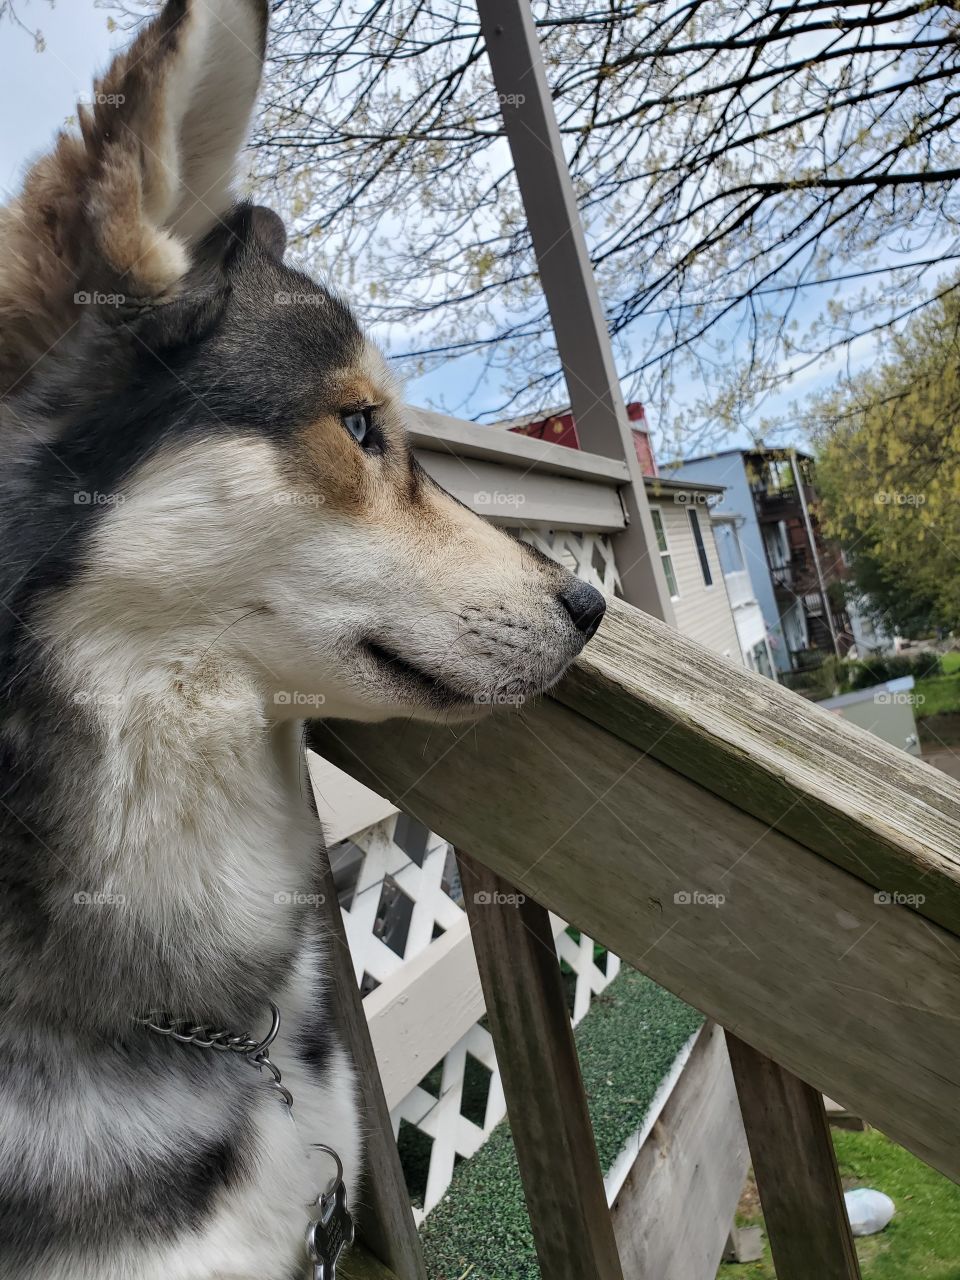 Kujo Bossin'
AKC Registered Siberian Husky
Looking out across the yard
Insta: howling_winds_siberians